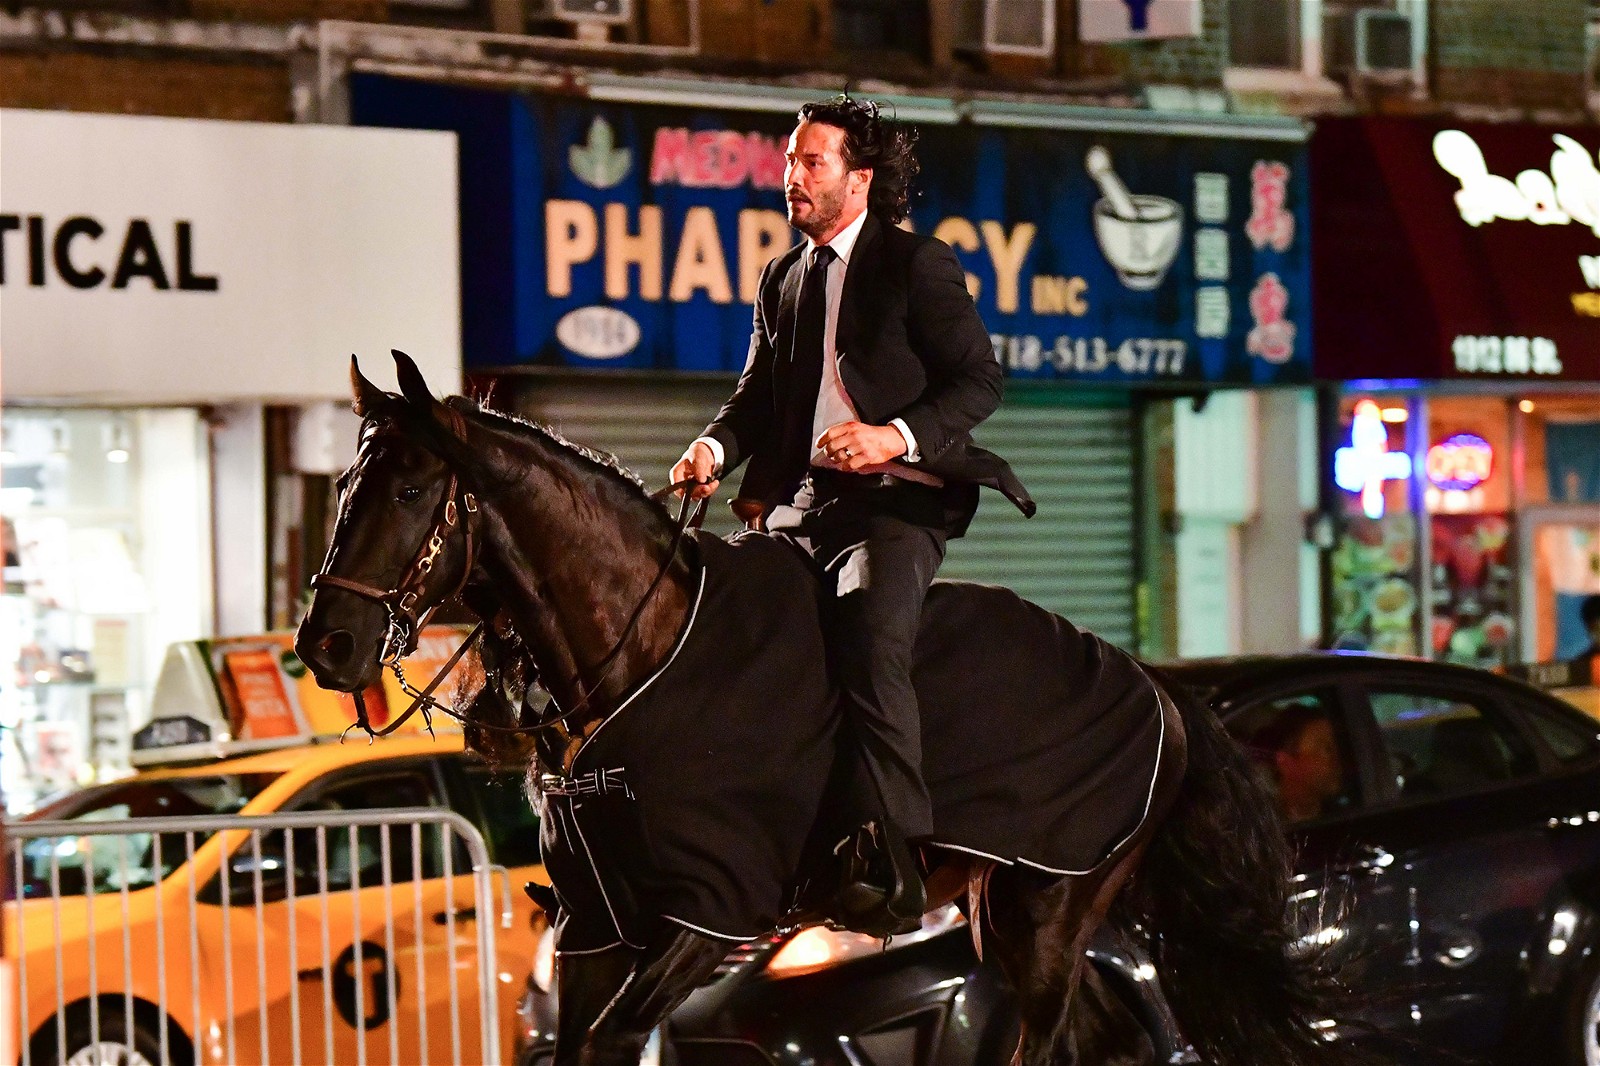 Keanu Reeves rode a horse through New York.